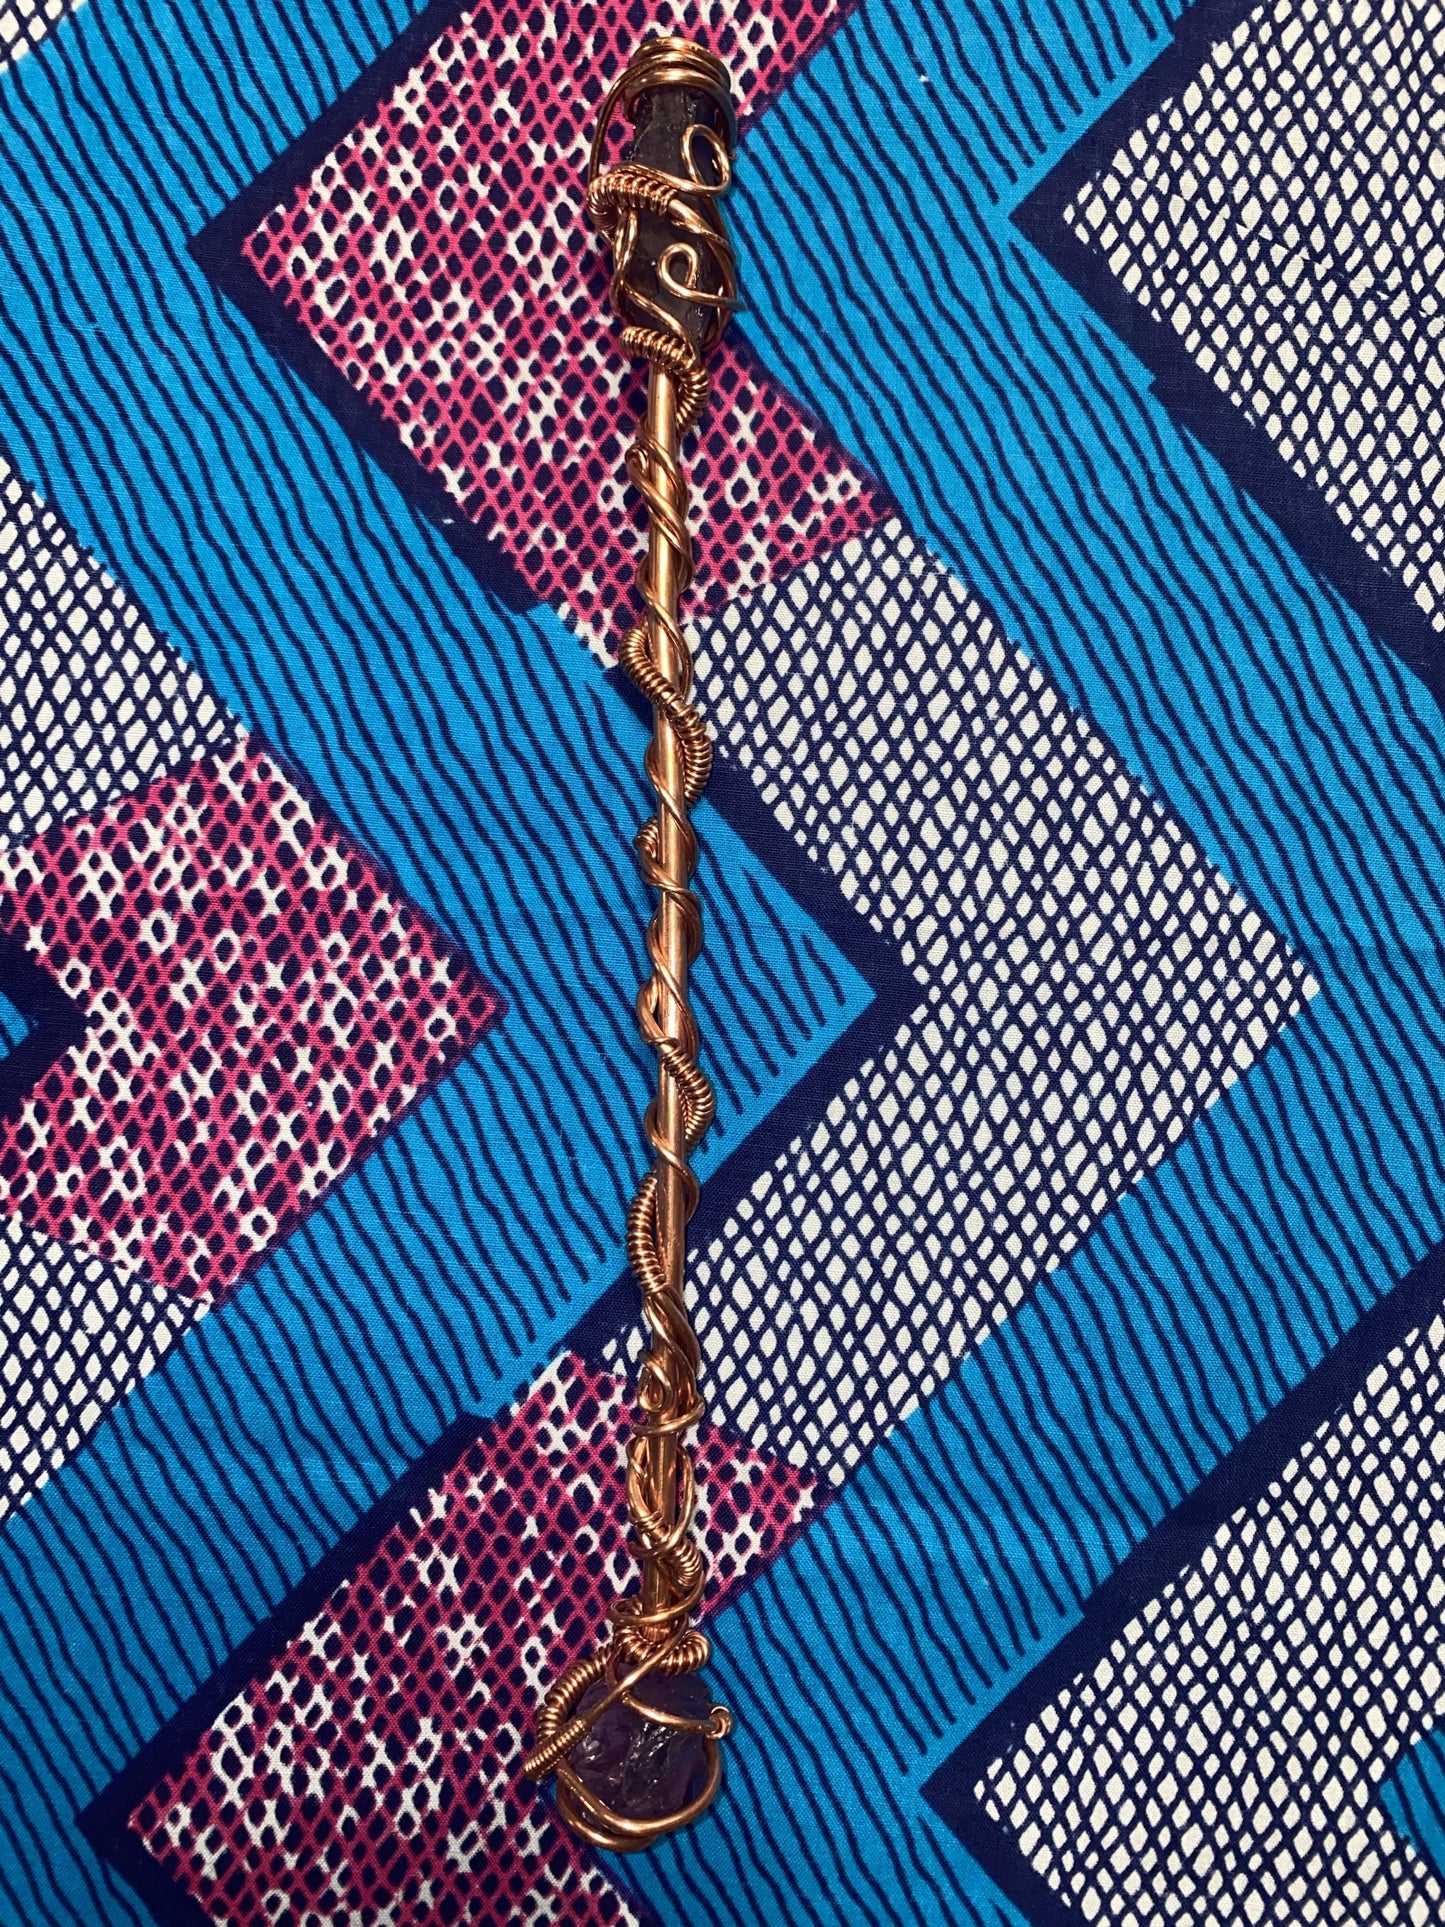 Copper wand